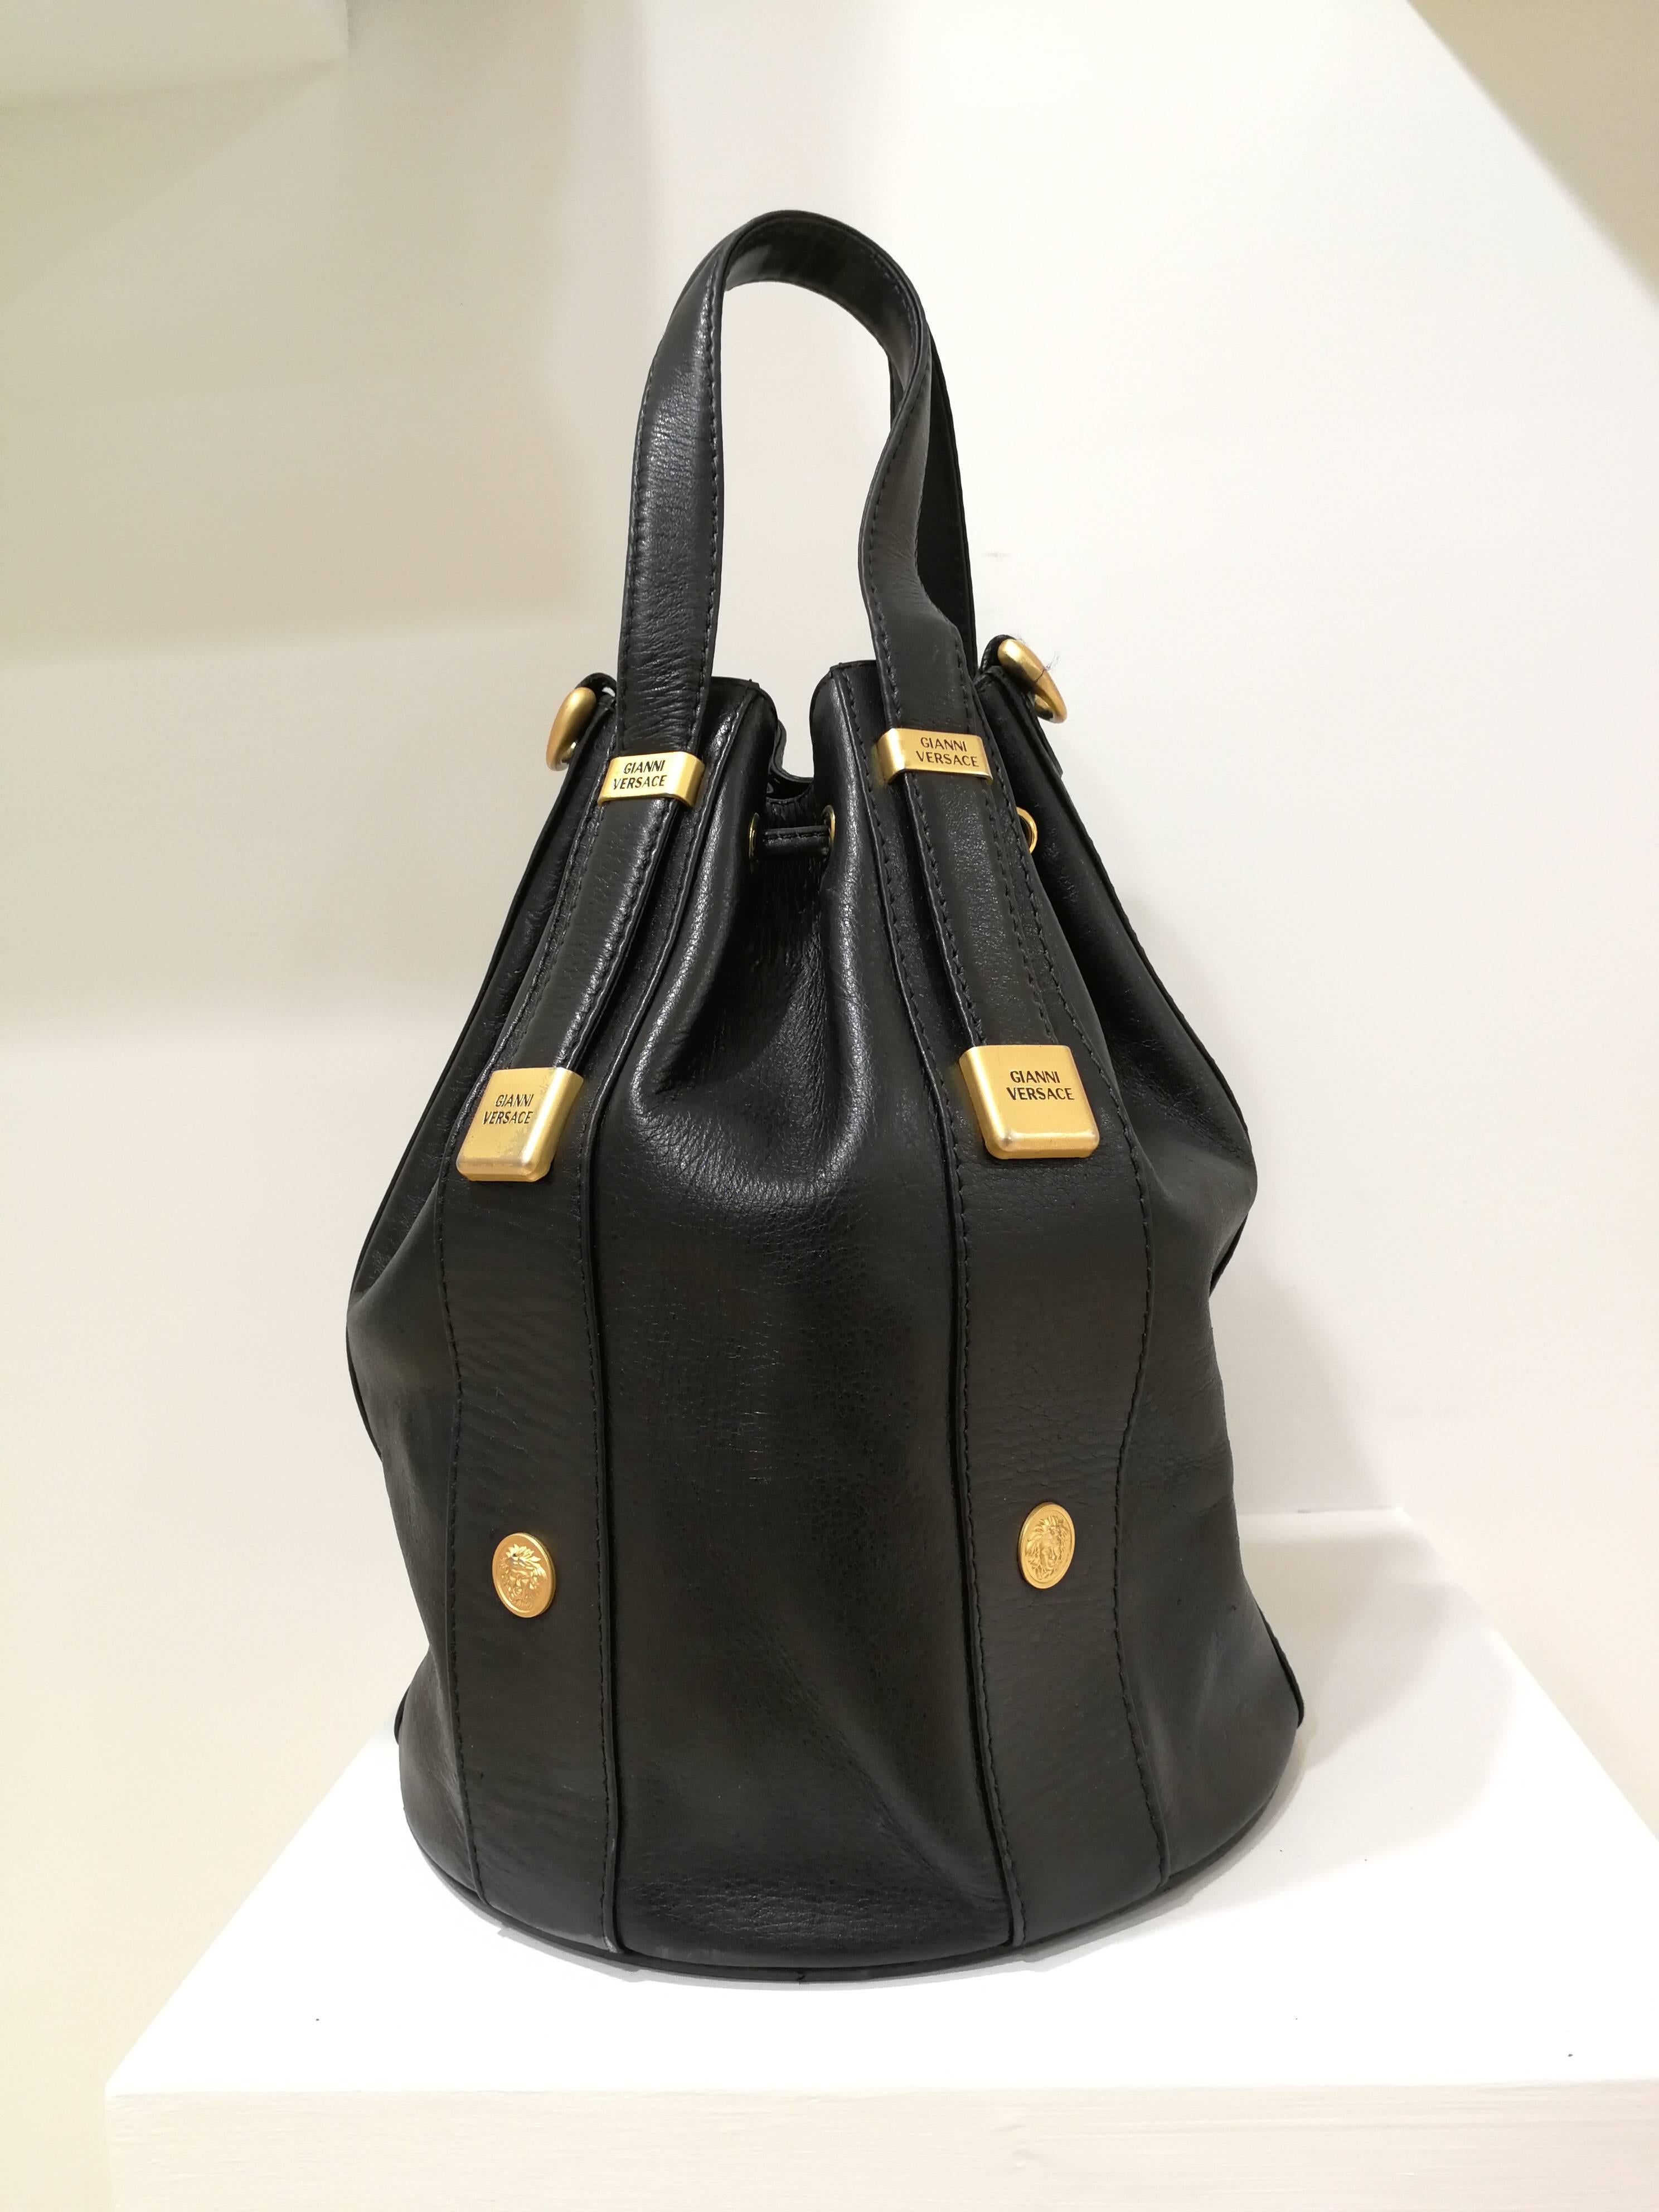 Gianni Versace Black leather Gold and Silver Tone Studs Satchel - Shoulder Bag 4